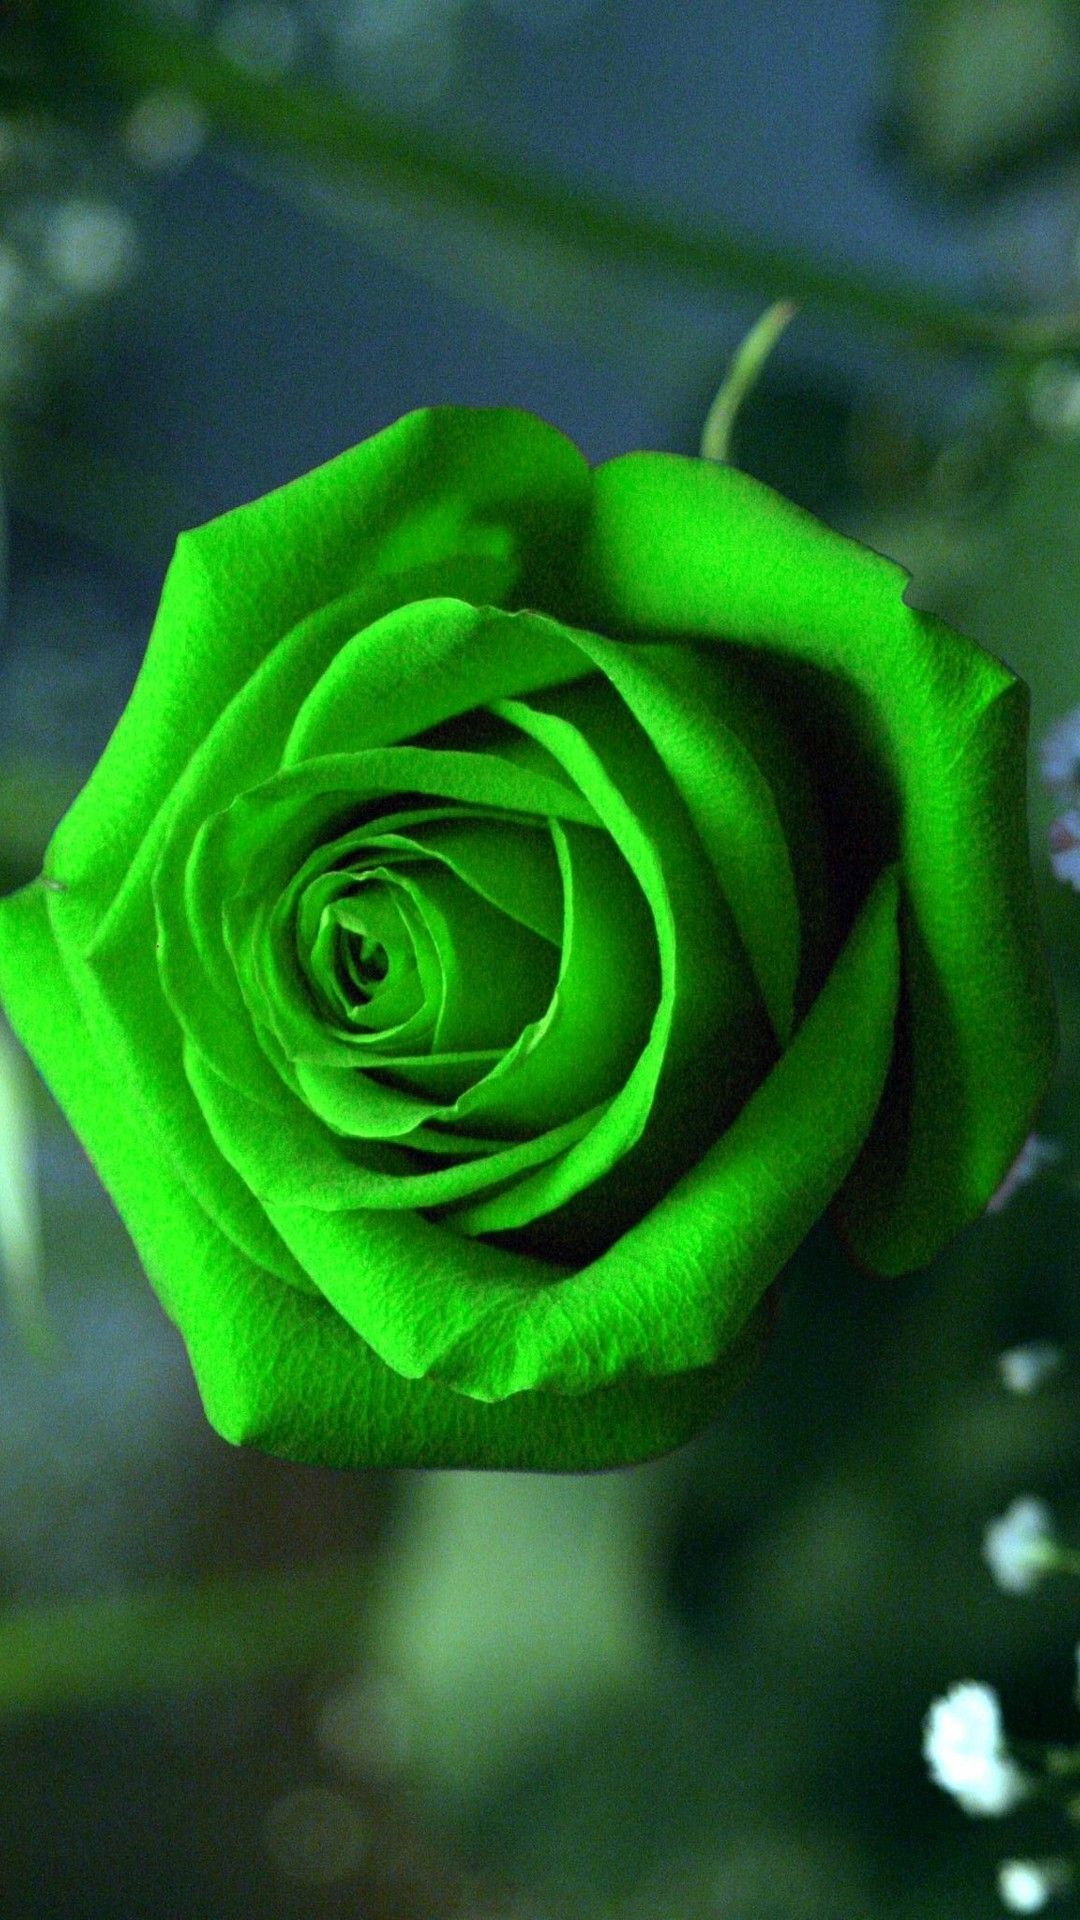 1080x1920 Green Rose Mobile Wallpaper Best Hd Wallpaper Rose Wallpaper Beautiful Flowers Wallpaper Green Rose